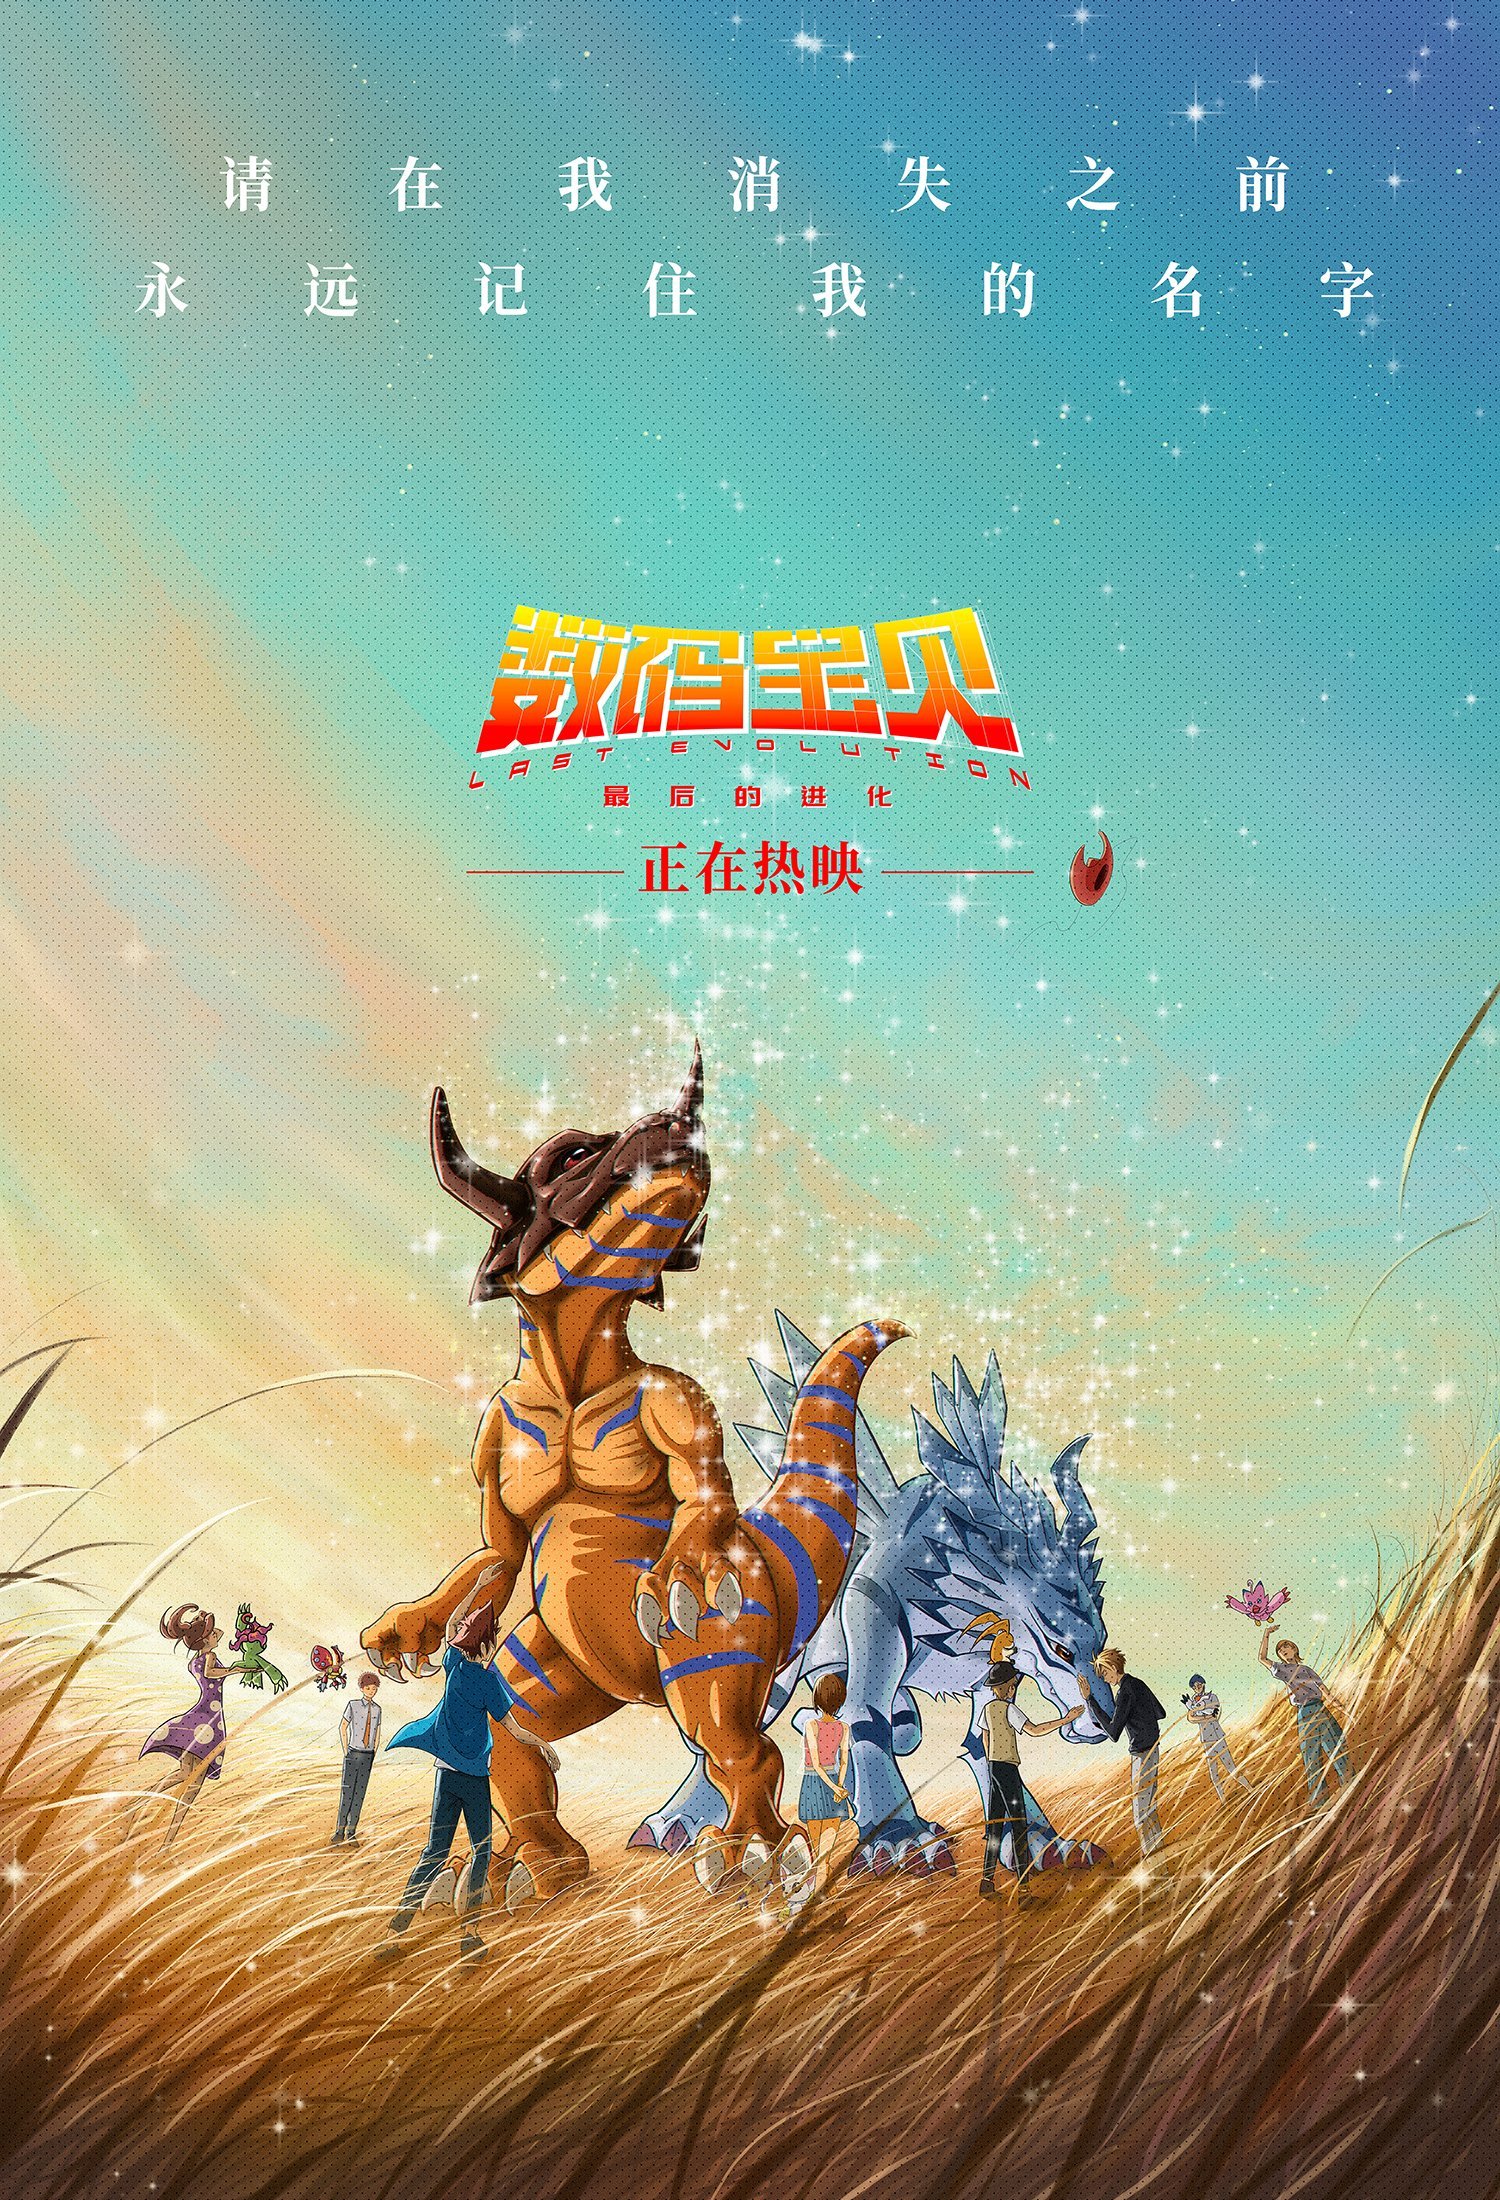 Digimon Adventure: Last Evolution Kizuna: bilheteria na China é